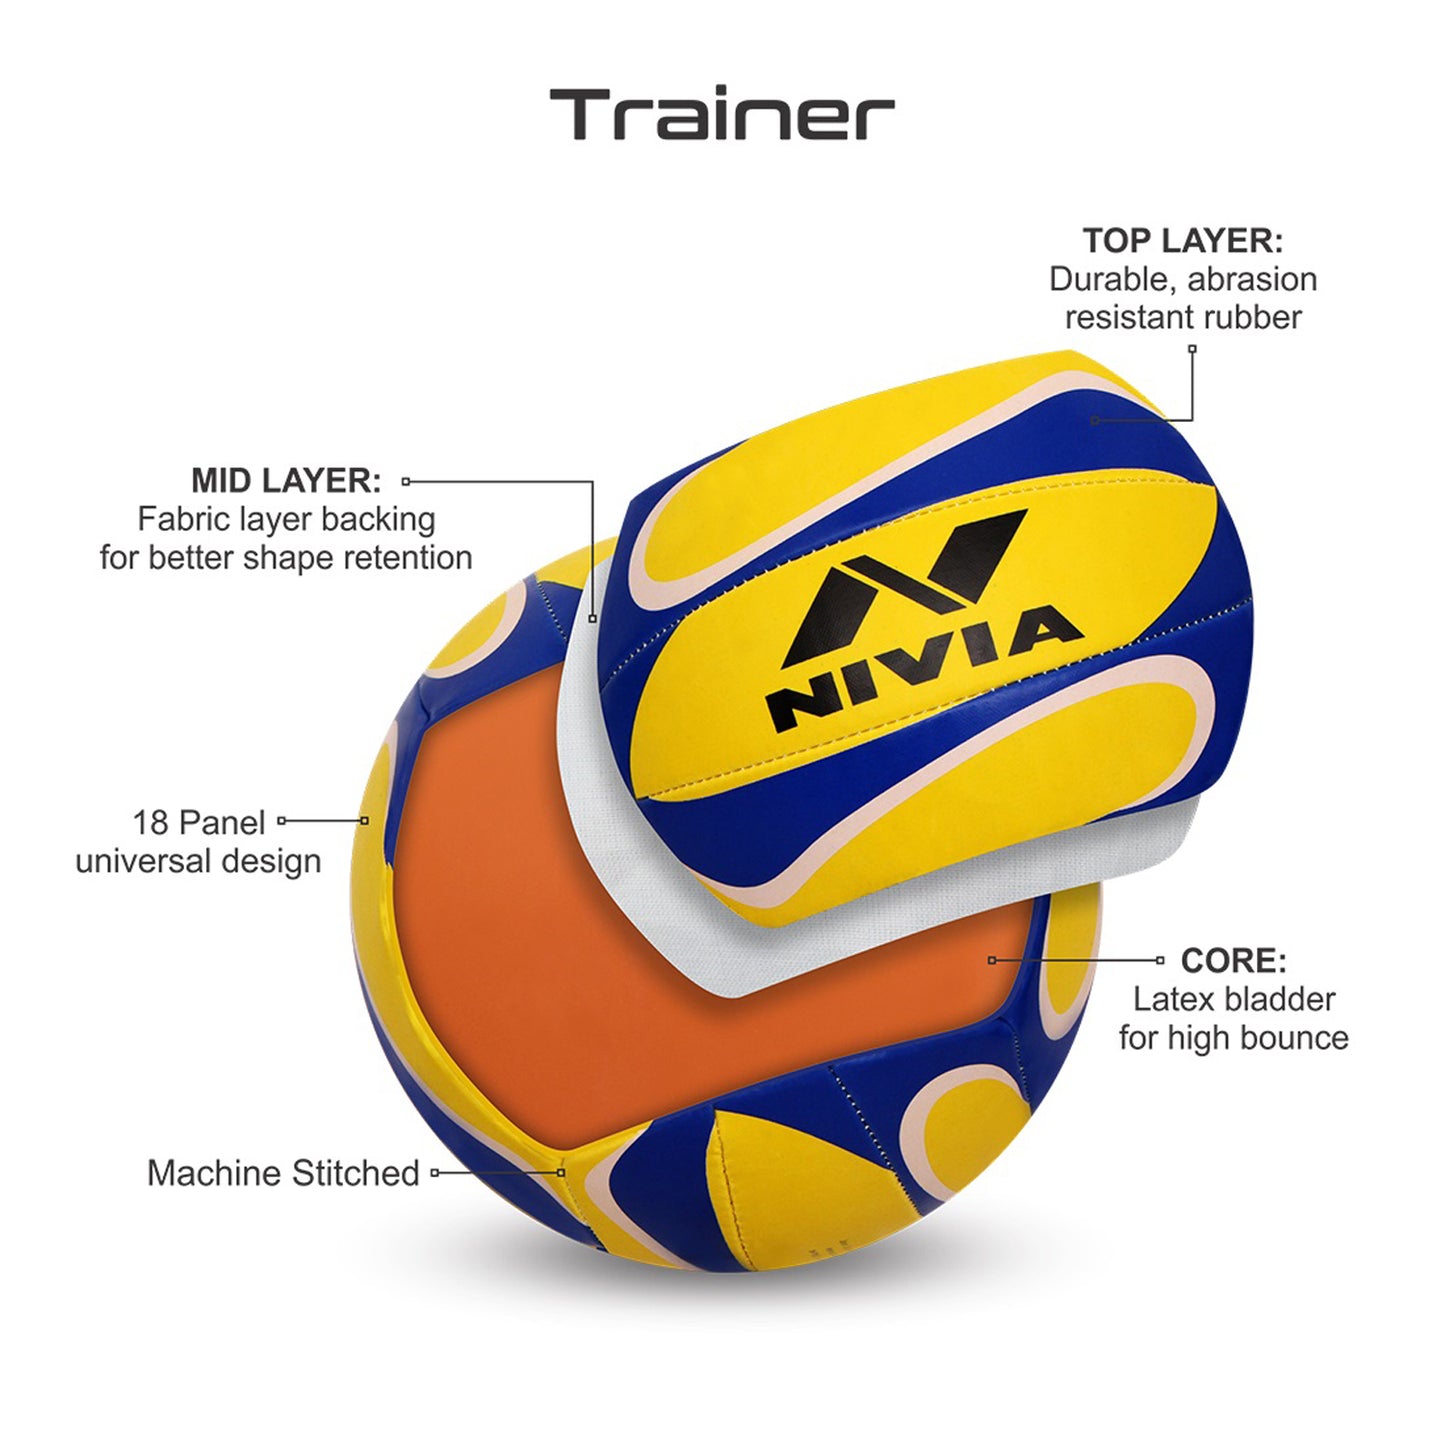 Nivia Trainer (H.S 18/P) 472 Vollyball, Yellow/Blue - Size 4 - Best Price online Prokicksports.com